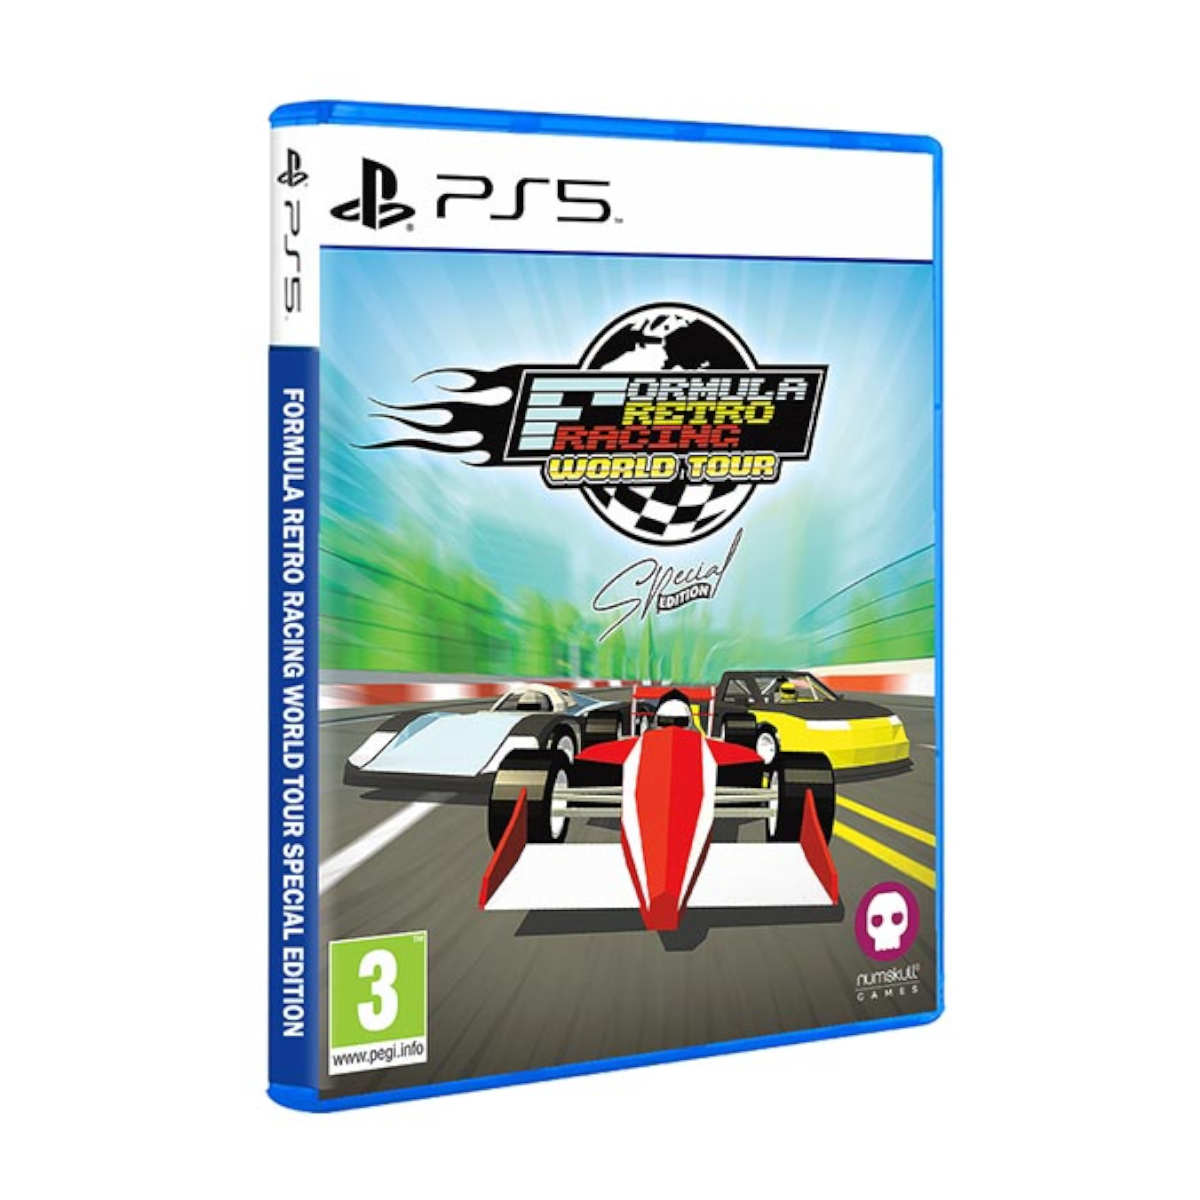 Buy Formula Retro Racing PS5 Special Tour Edition World